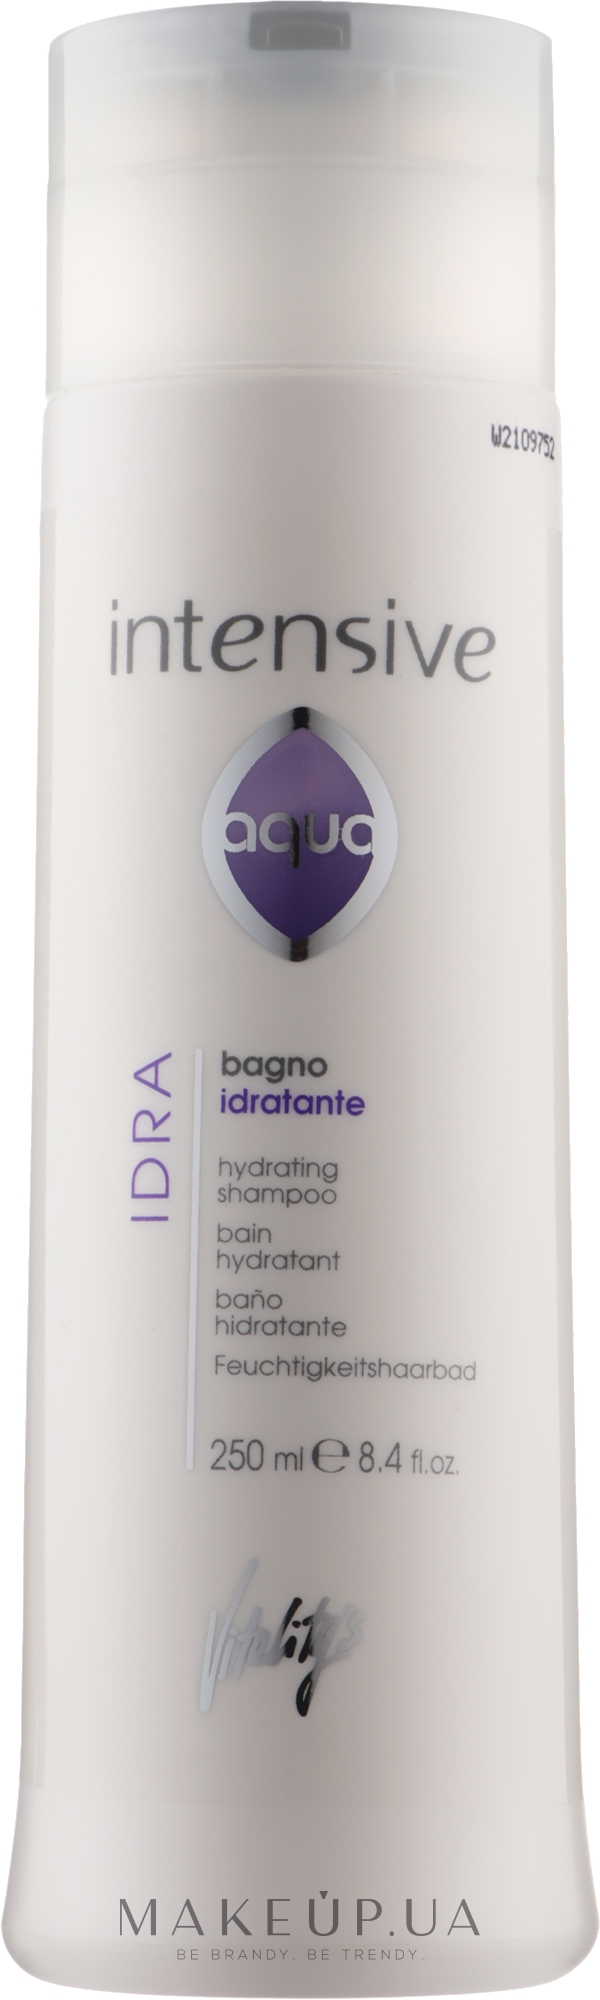 Зволожуючий шампунь - vitality's Intensive Aqua Hydrating Shampoo — фото 250ml